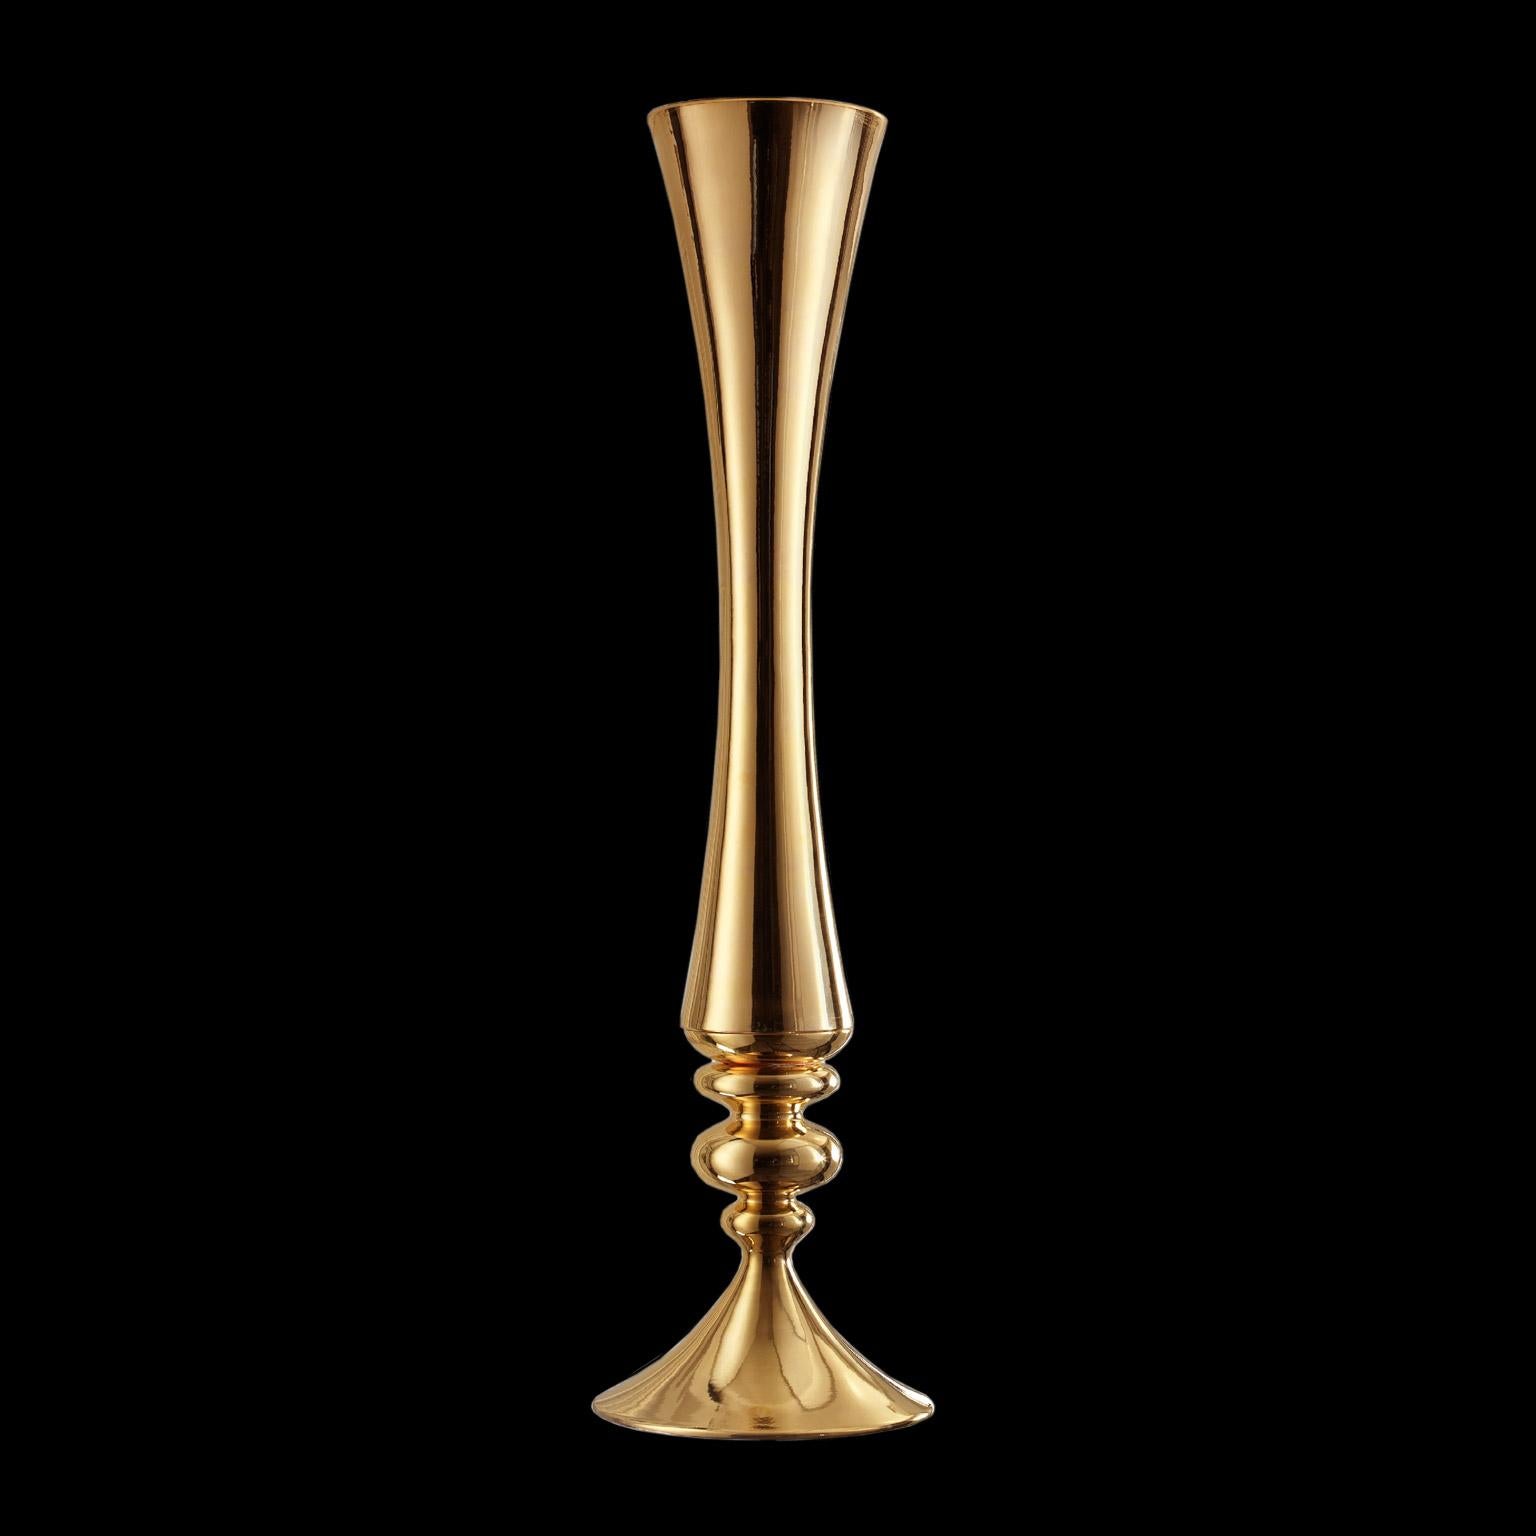 Ceramic vase MUSE
cod. VS222
handcrafted in 24-karat gold
and white glazed inside 

measures: 
H 185.0 cm.
Dm. 27.0 cm.